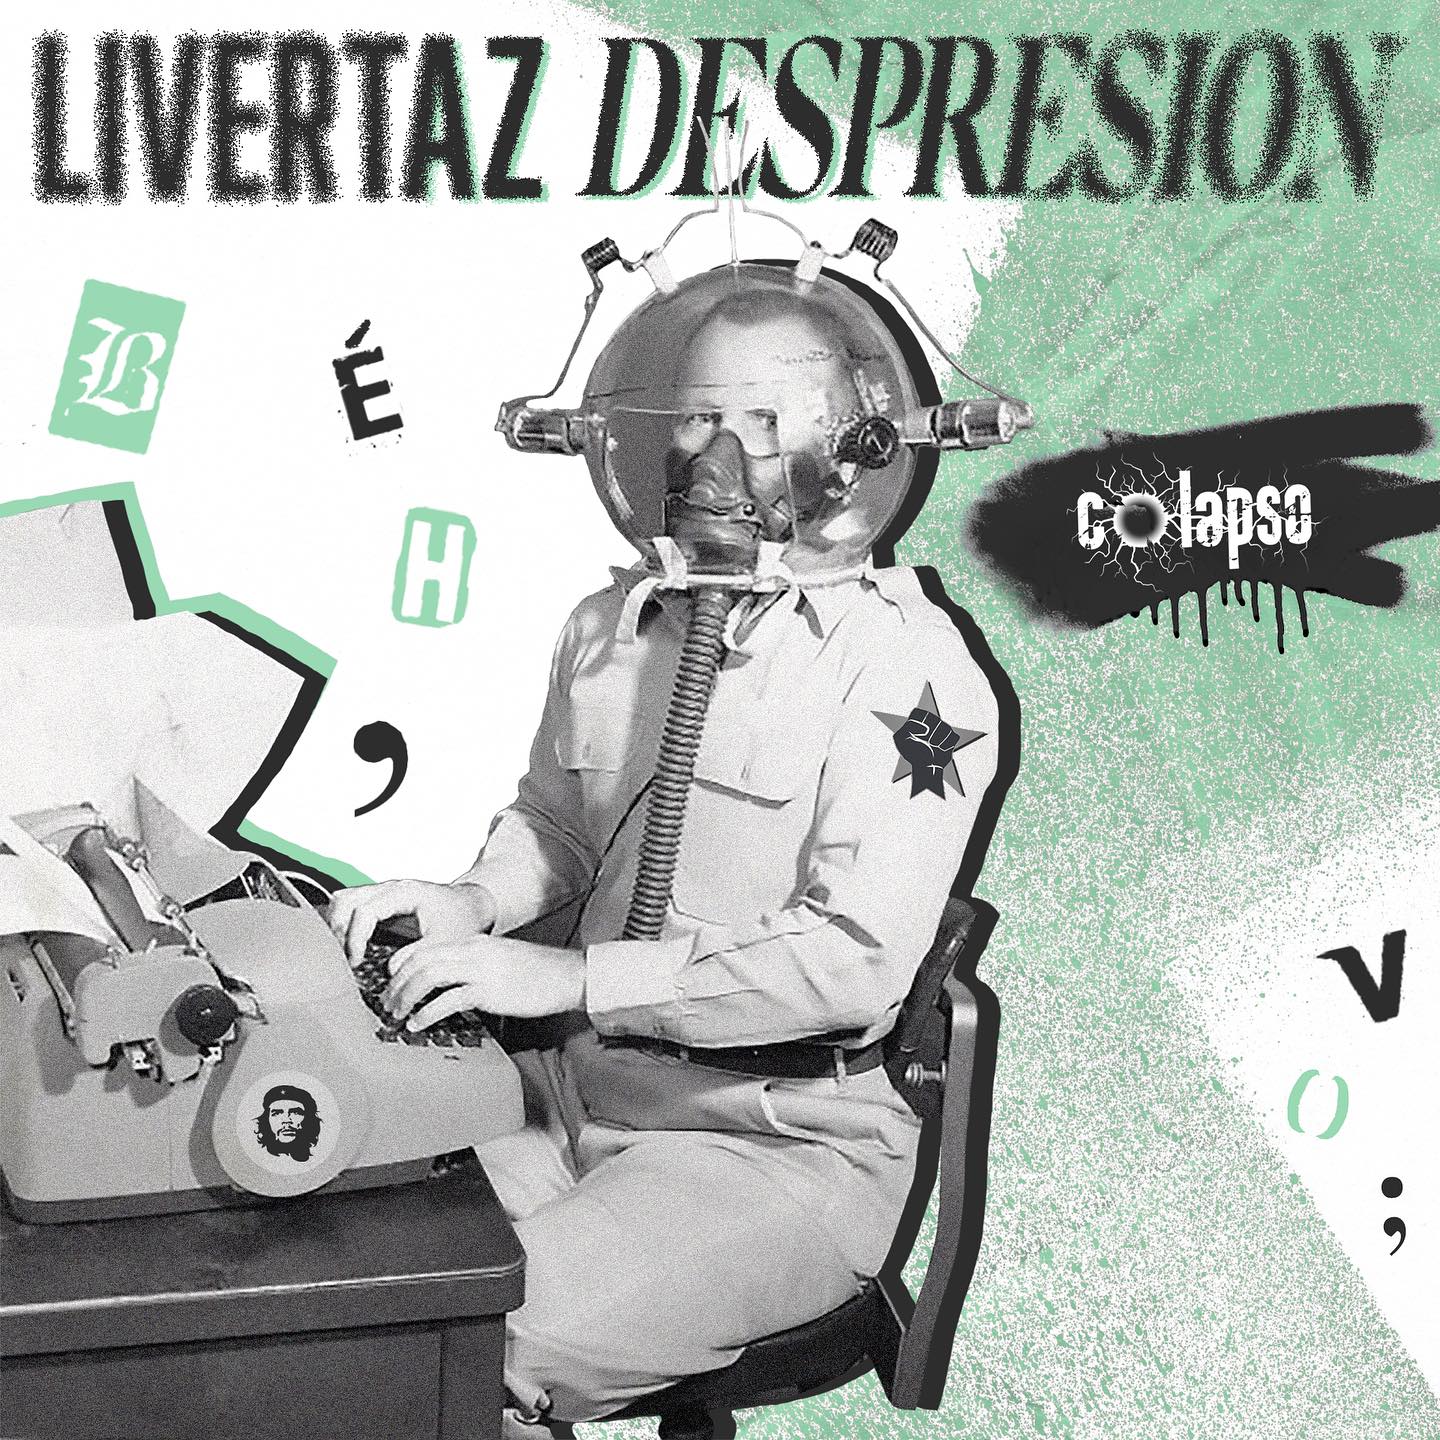 Colapso – “Livertaz Despresion”